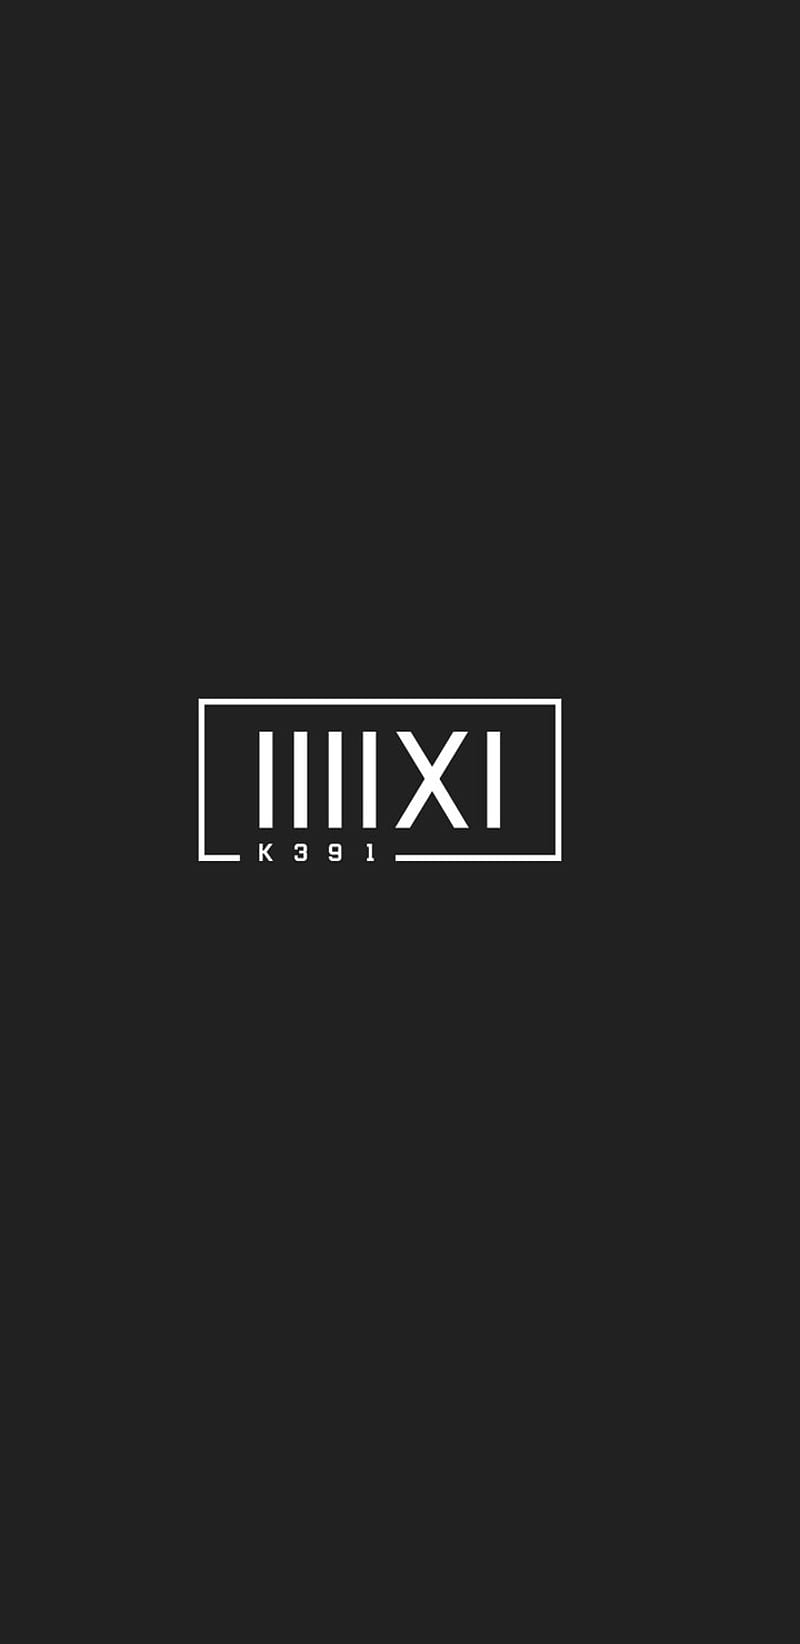 IIIIXI, k-391, ignite, mystery, logo, HD phone wallpaper